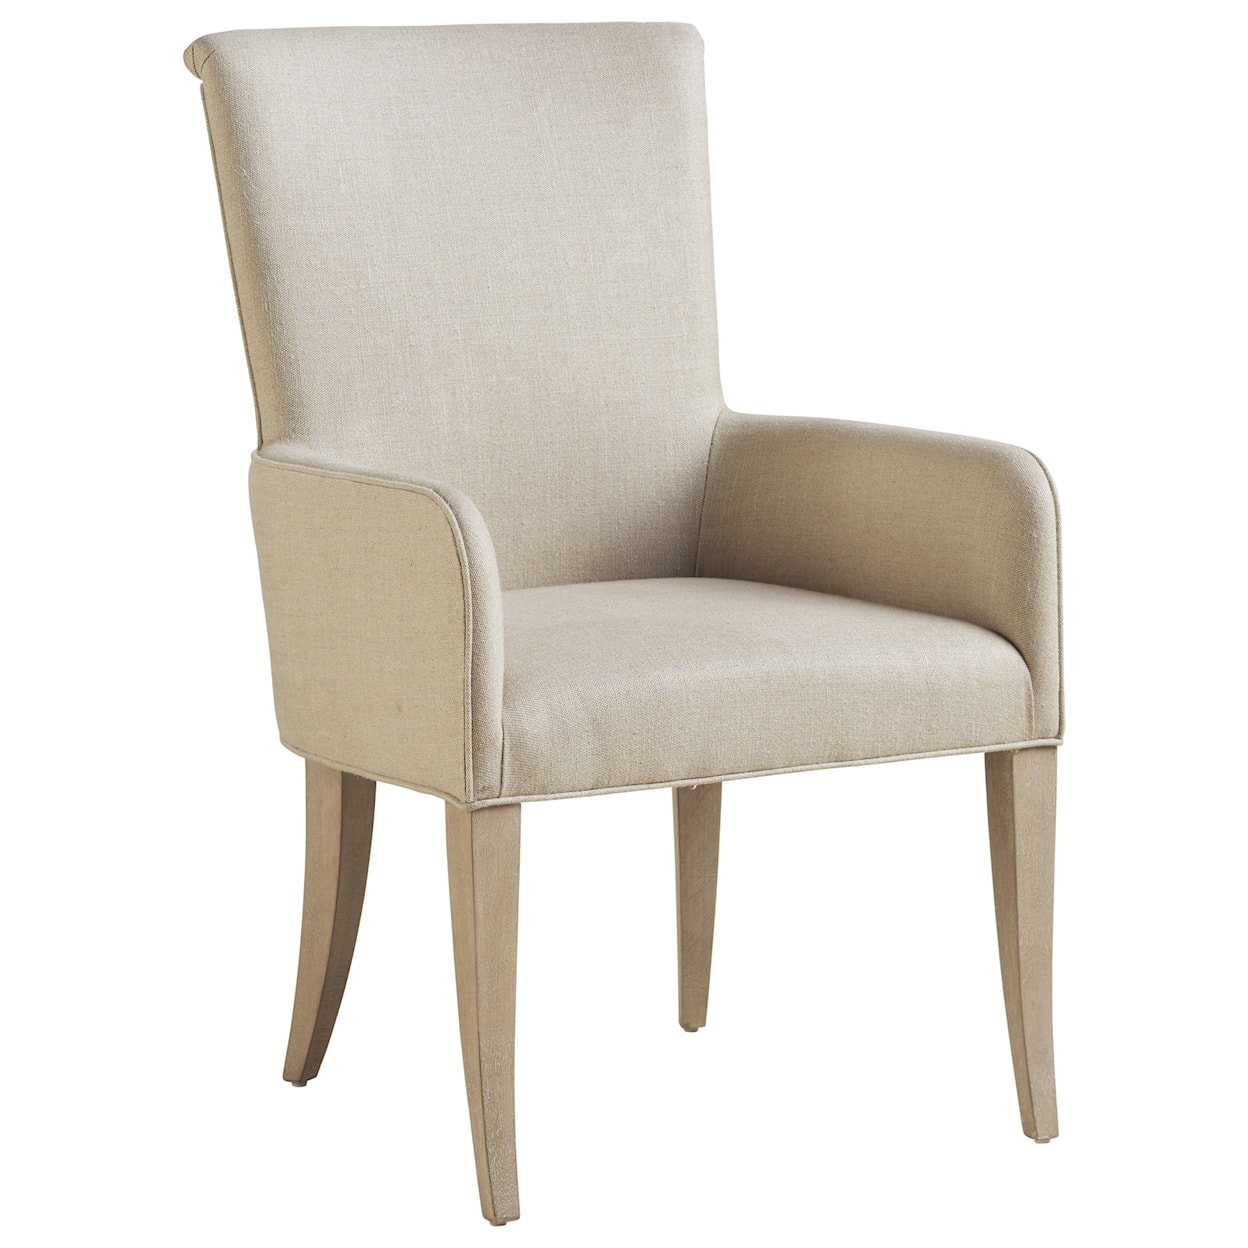 Barclay Butera Malibu Serra Upholstered Arm Chair